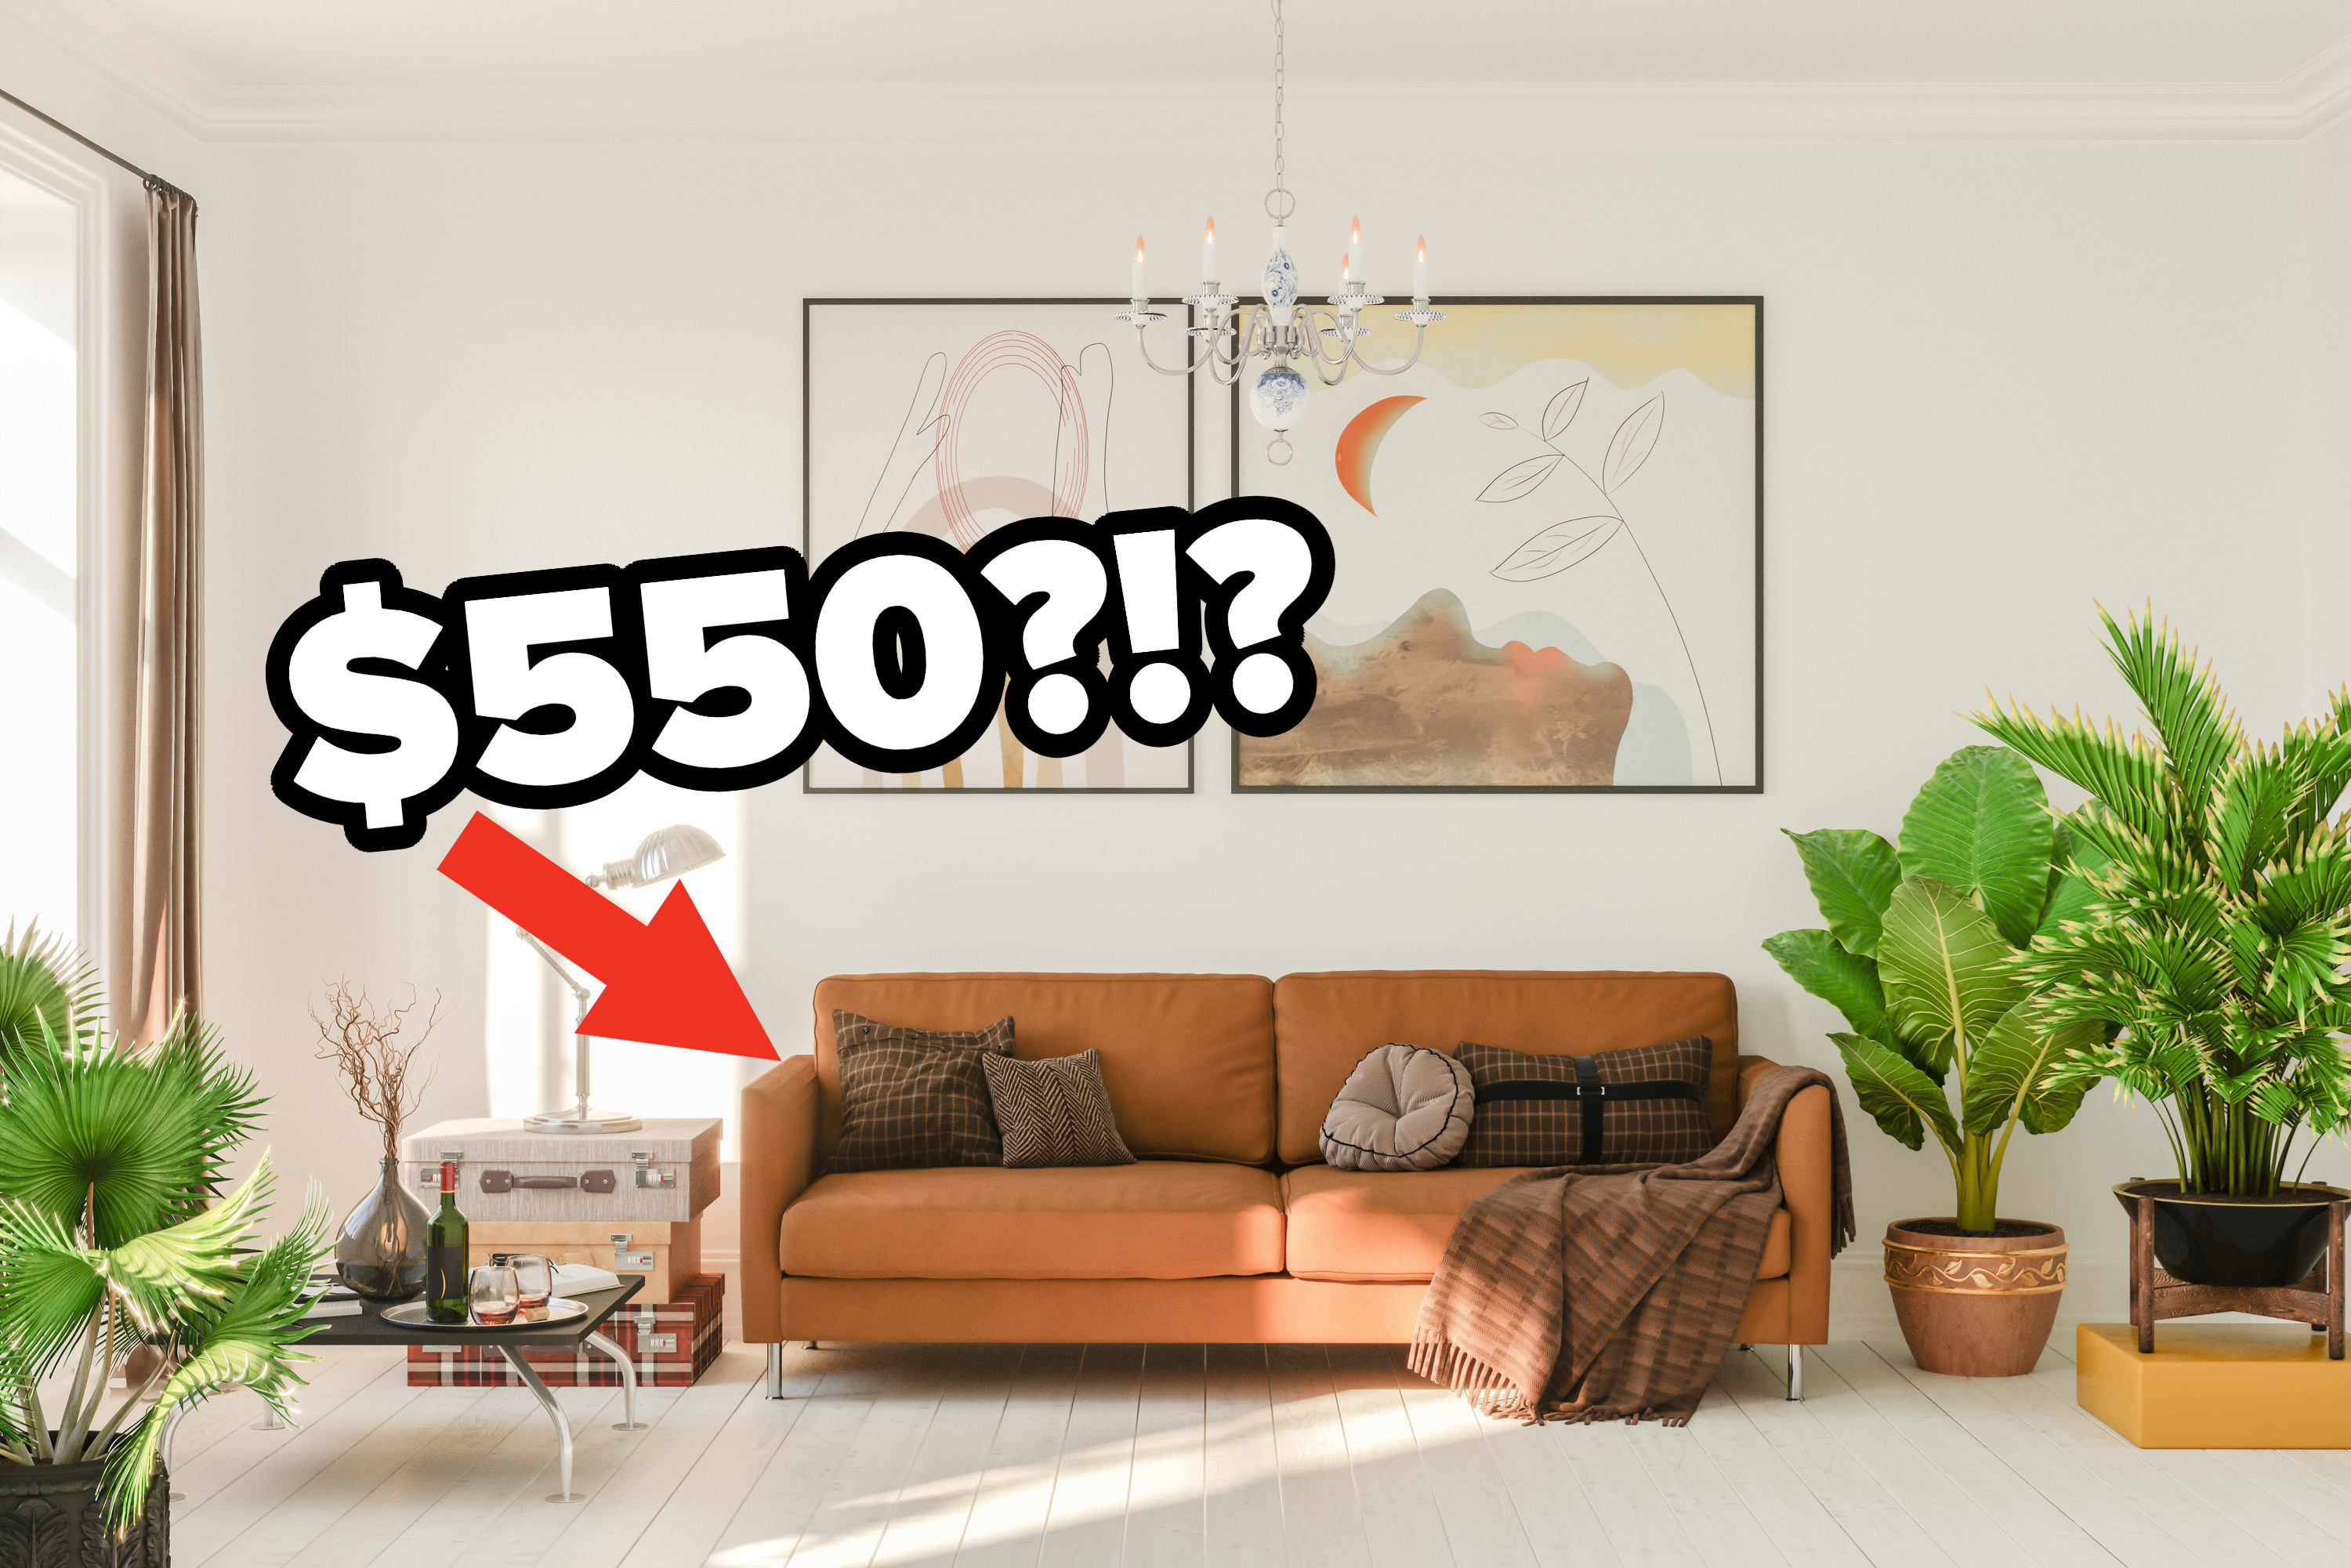 A $550 sofa